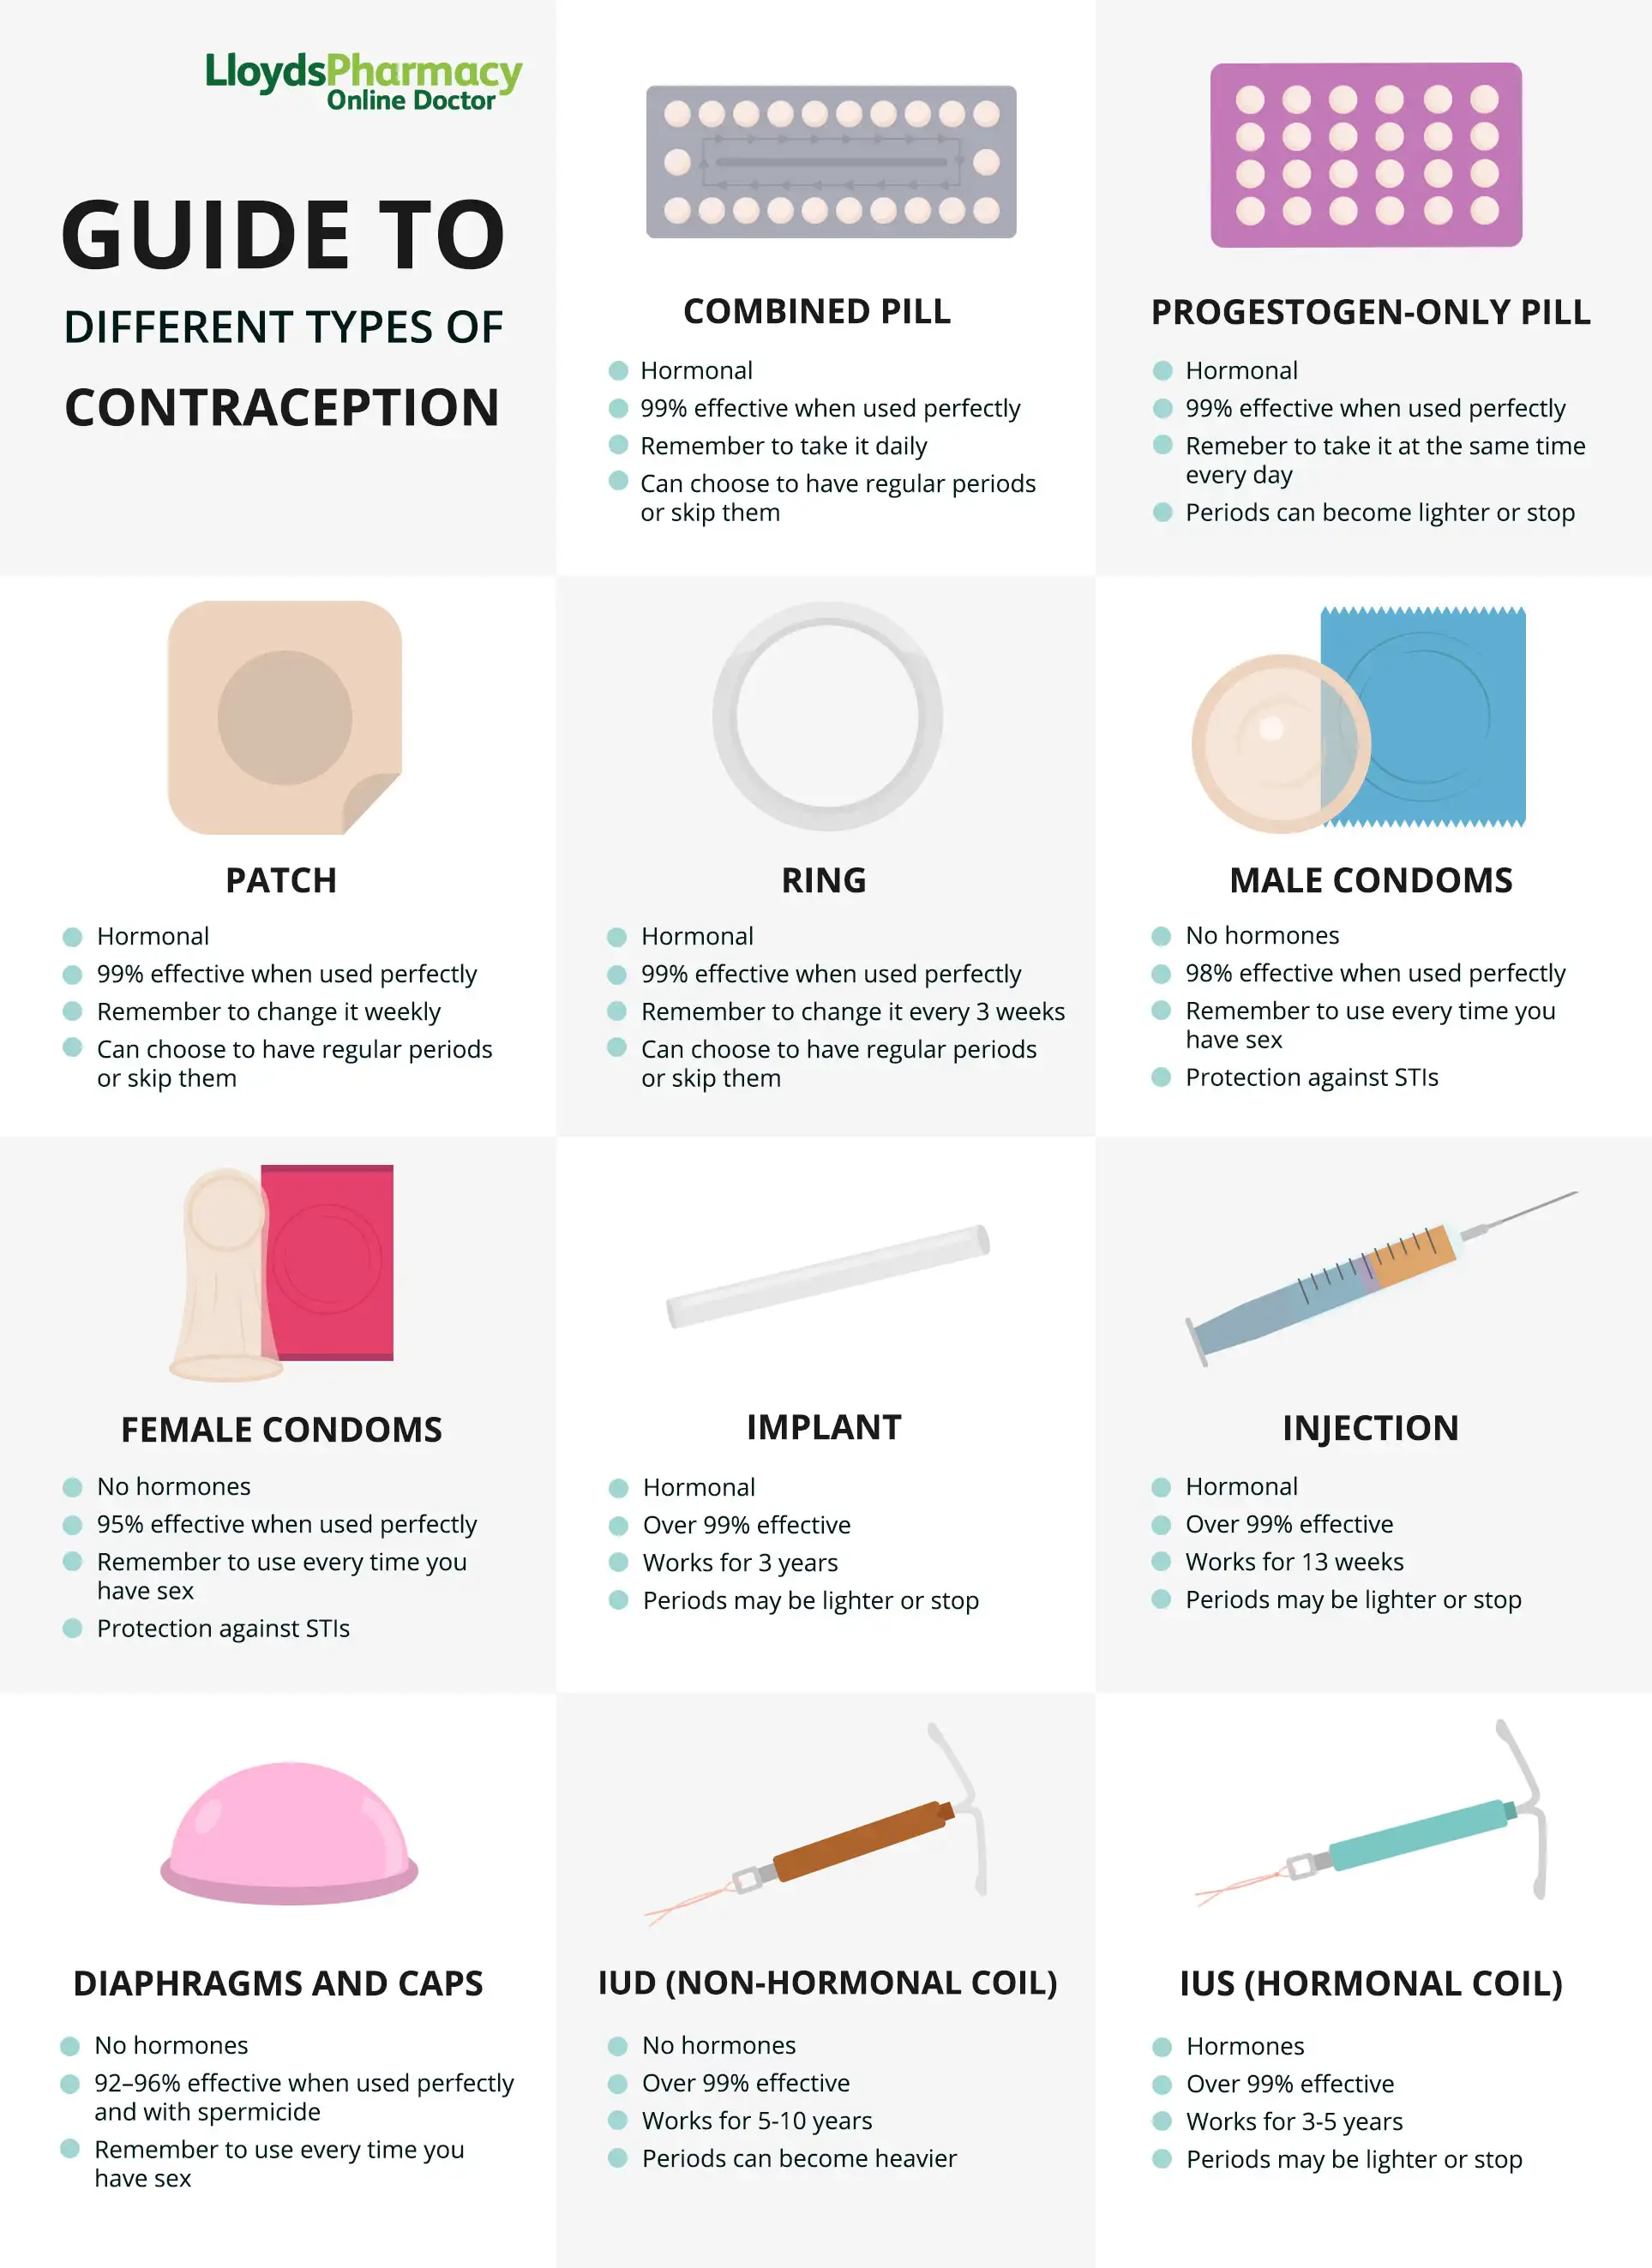 Contraceptive Methods Guide Lloydspharmacy Online Doctor Uk